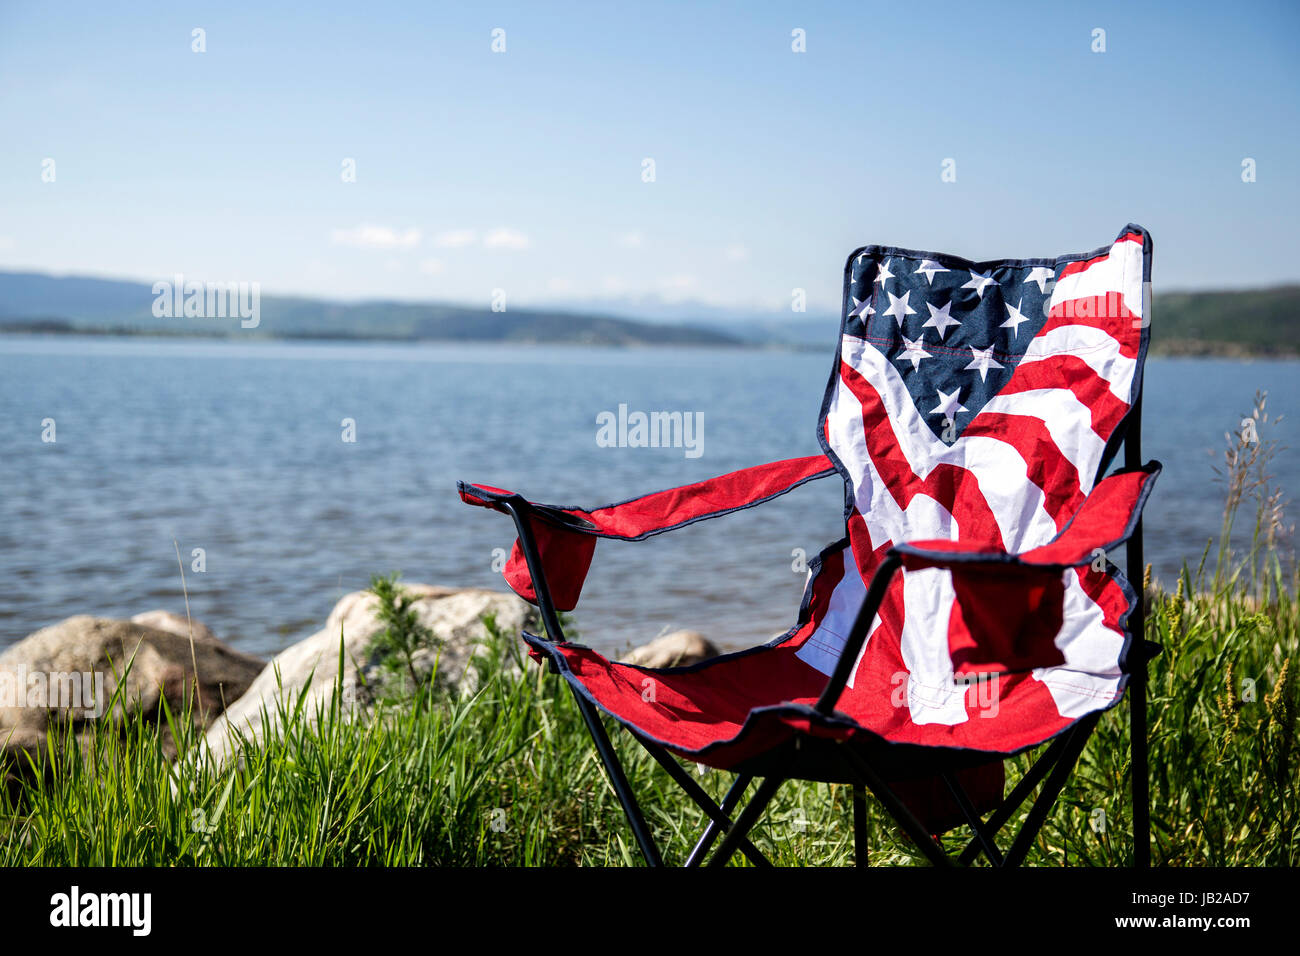 American flag Campingstuhl am See für 4. Juli Feier Stockfoto